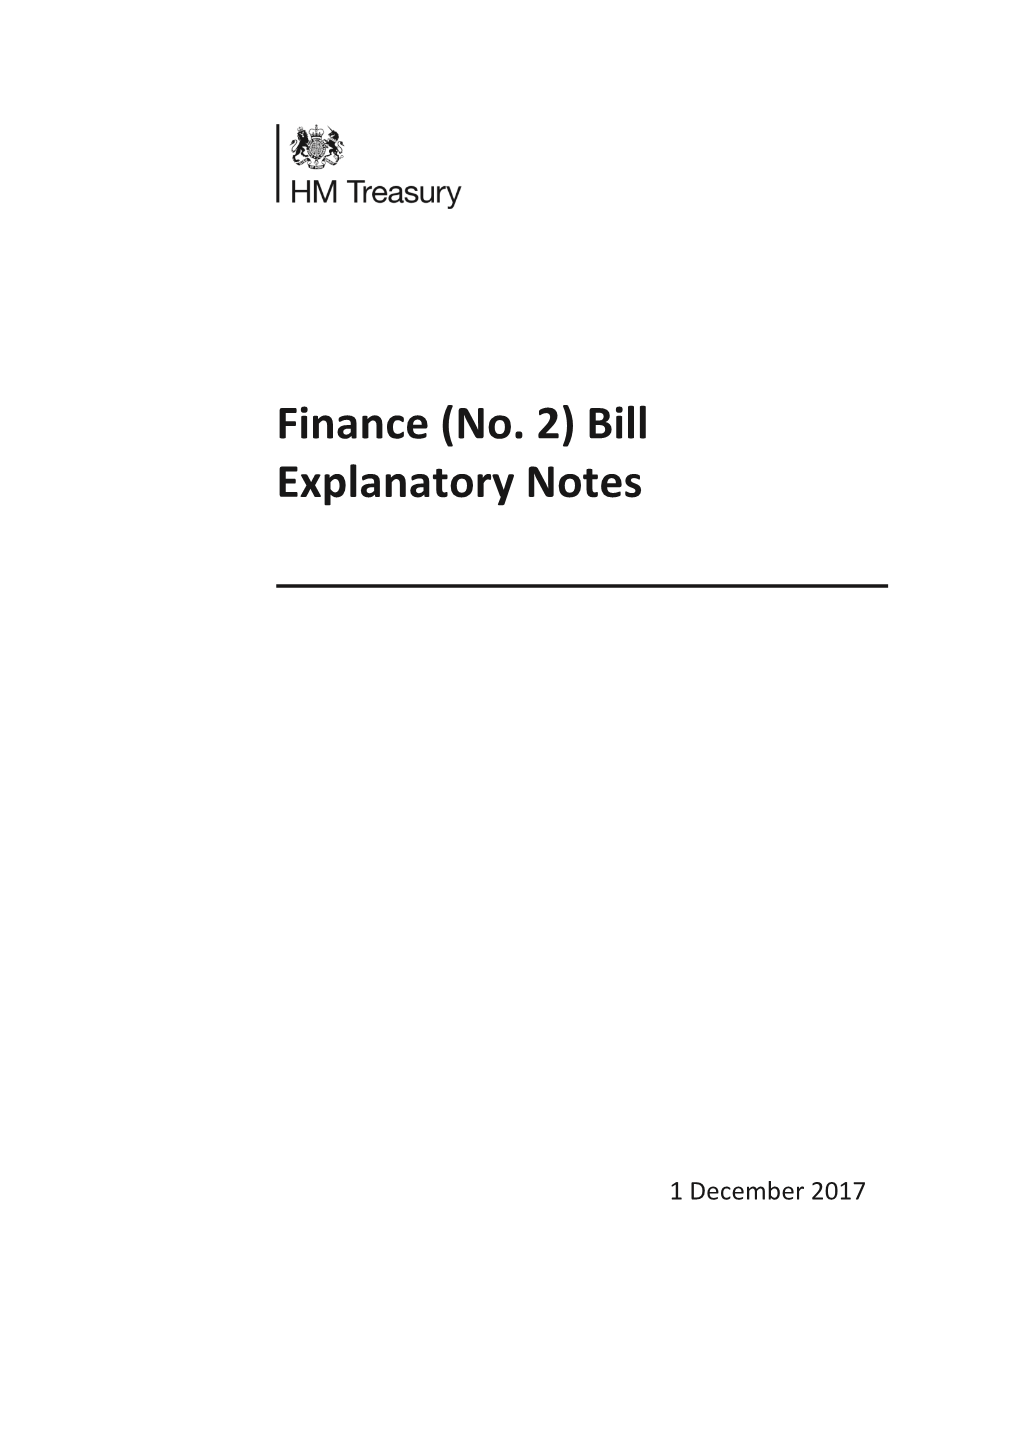 Finance Bill 2017-18 Explanatory Notes